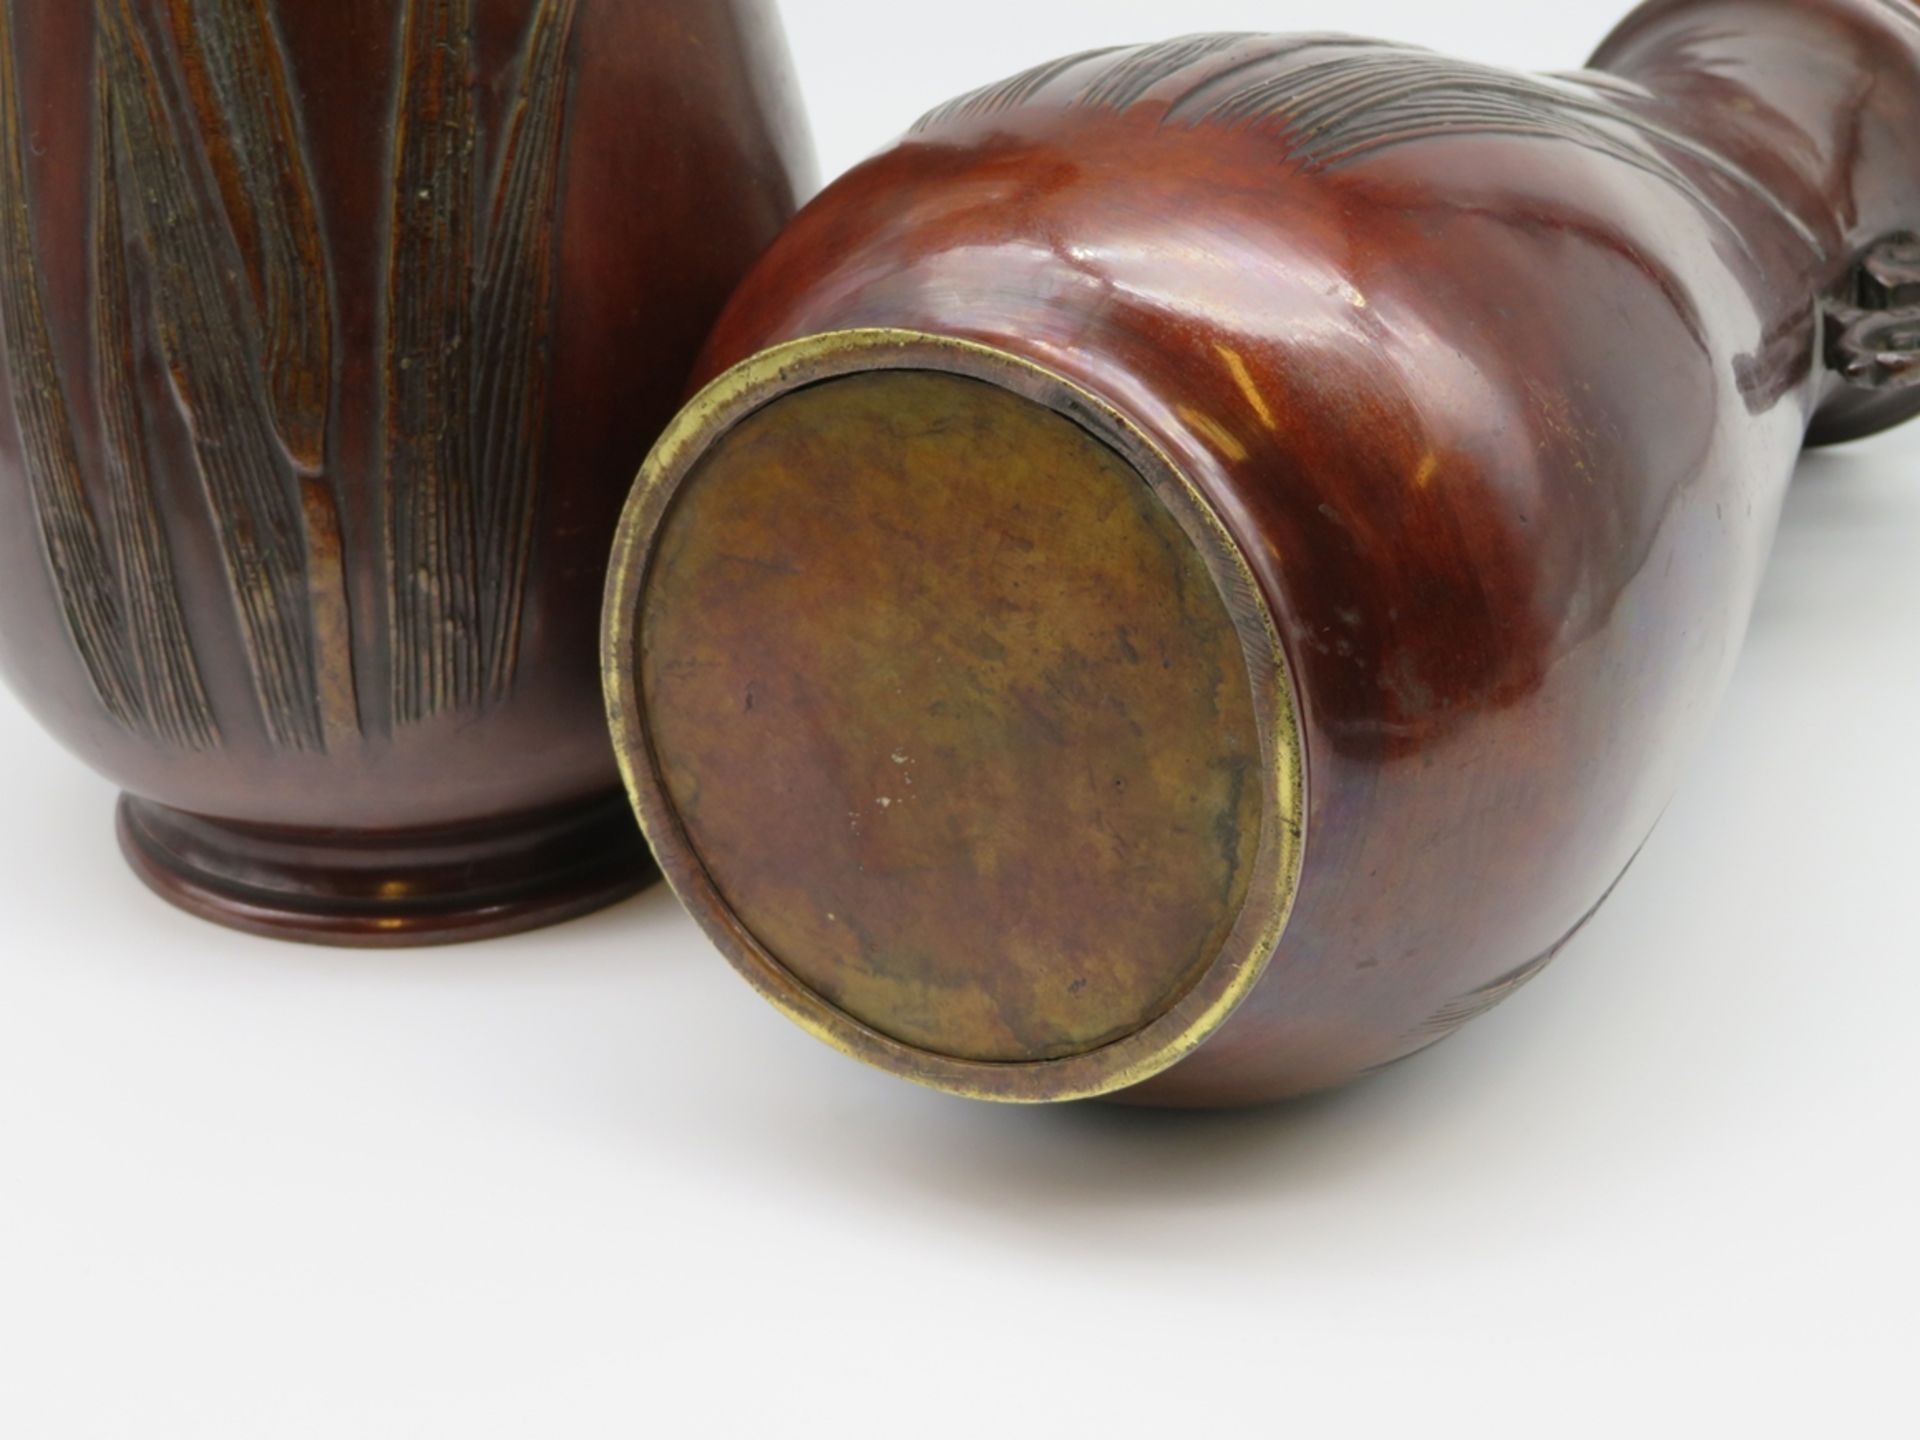 2 Vasen, Japan, um 1900, Bronze patiniert, h 31 cm, d 14 cm. - Image 3 of 3